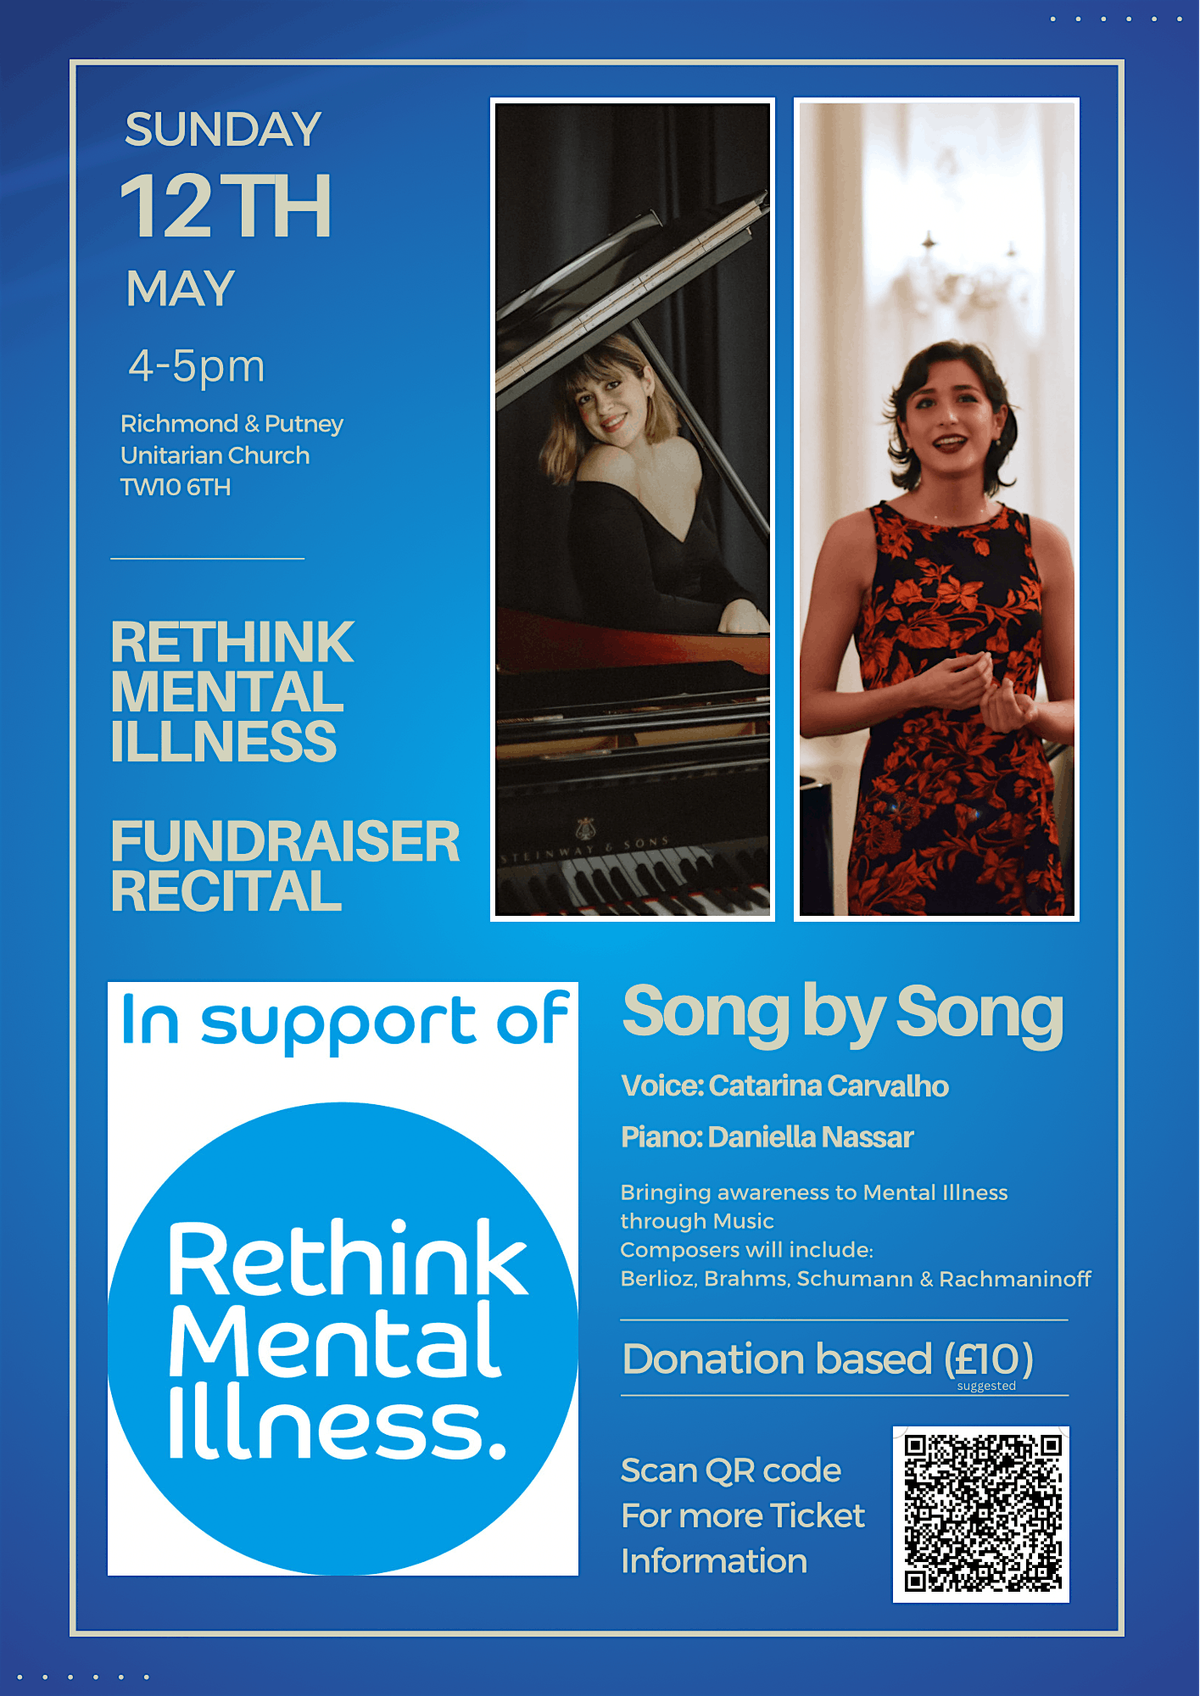 Song by Song - Rethink Mental Illness fundraiser recital